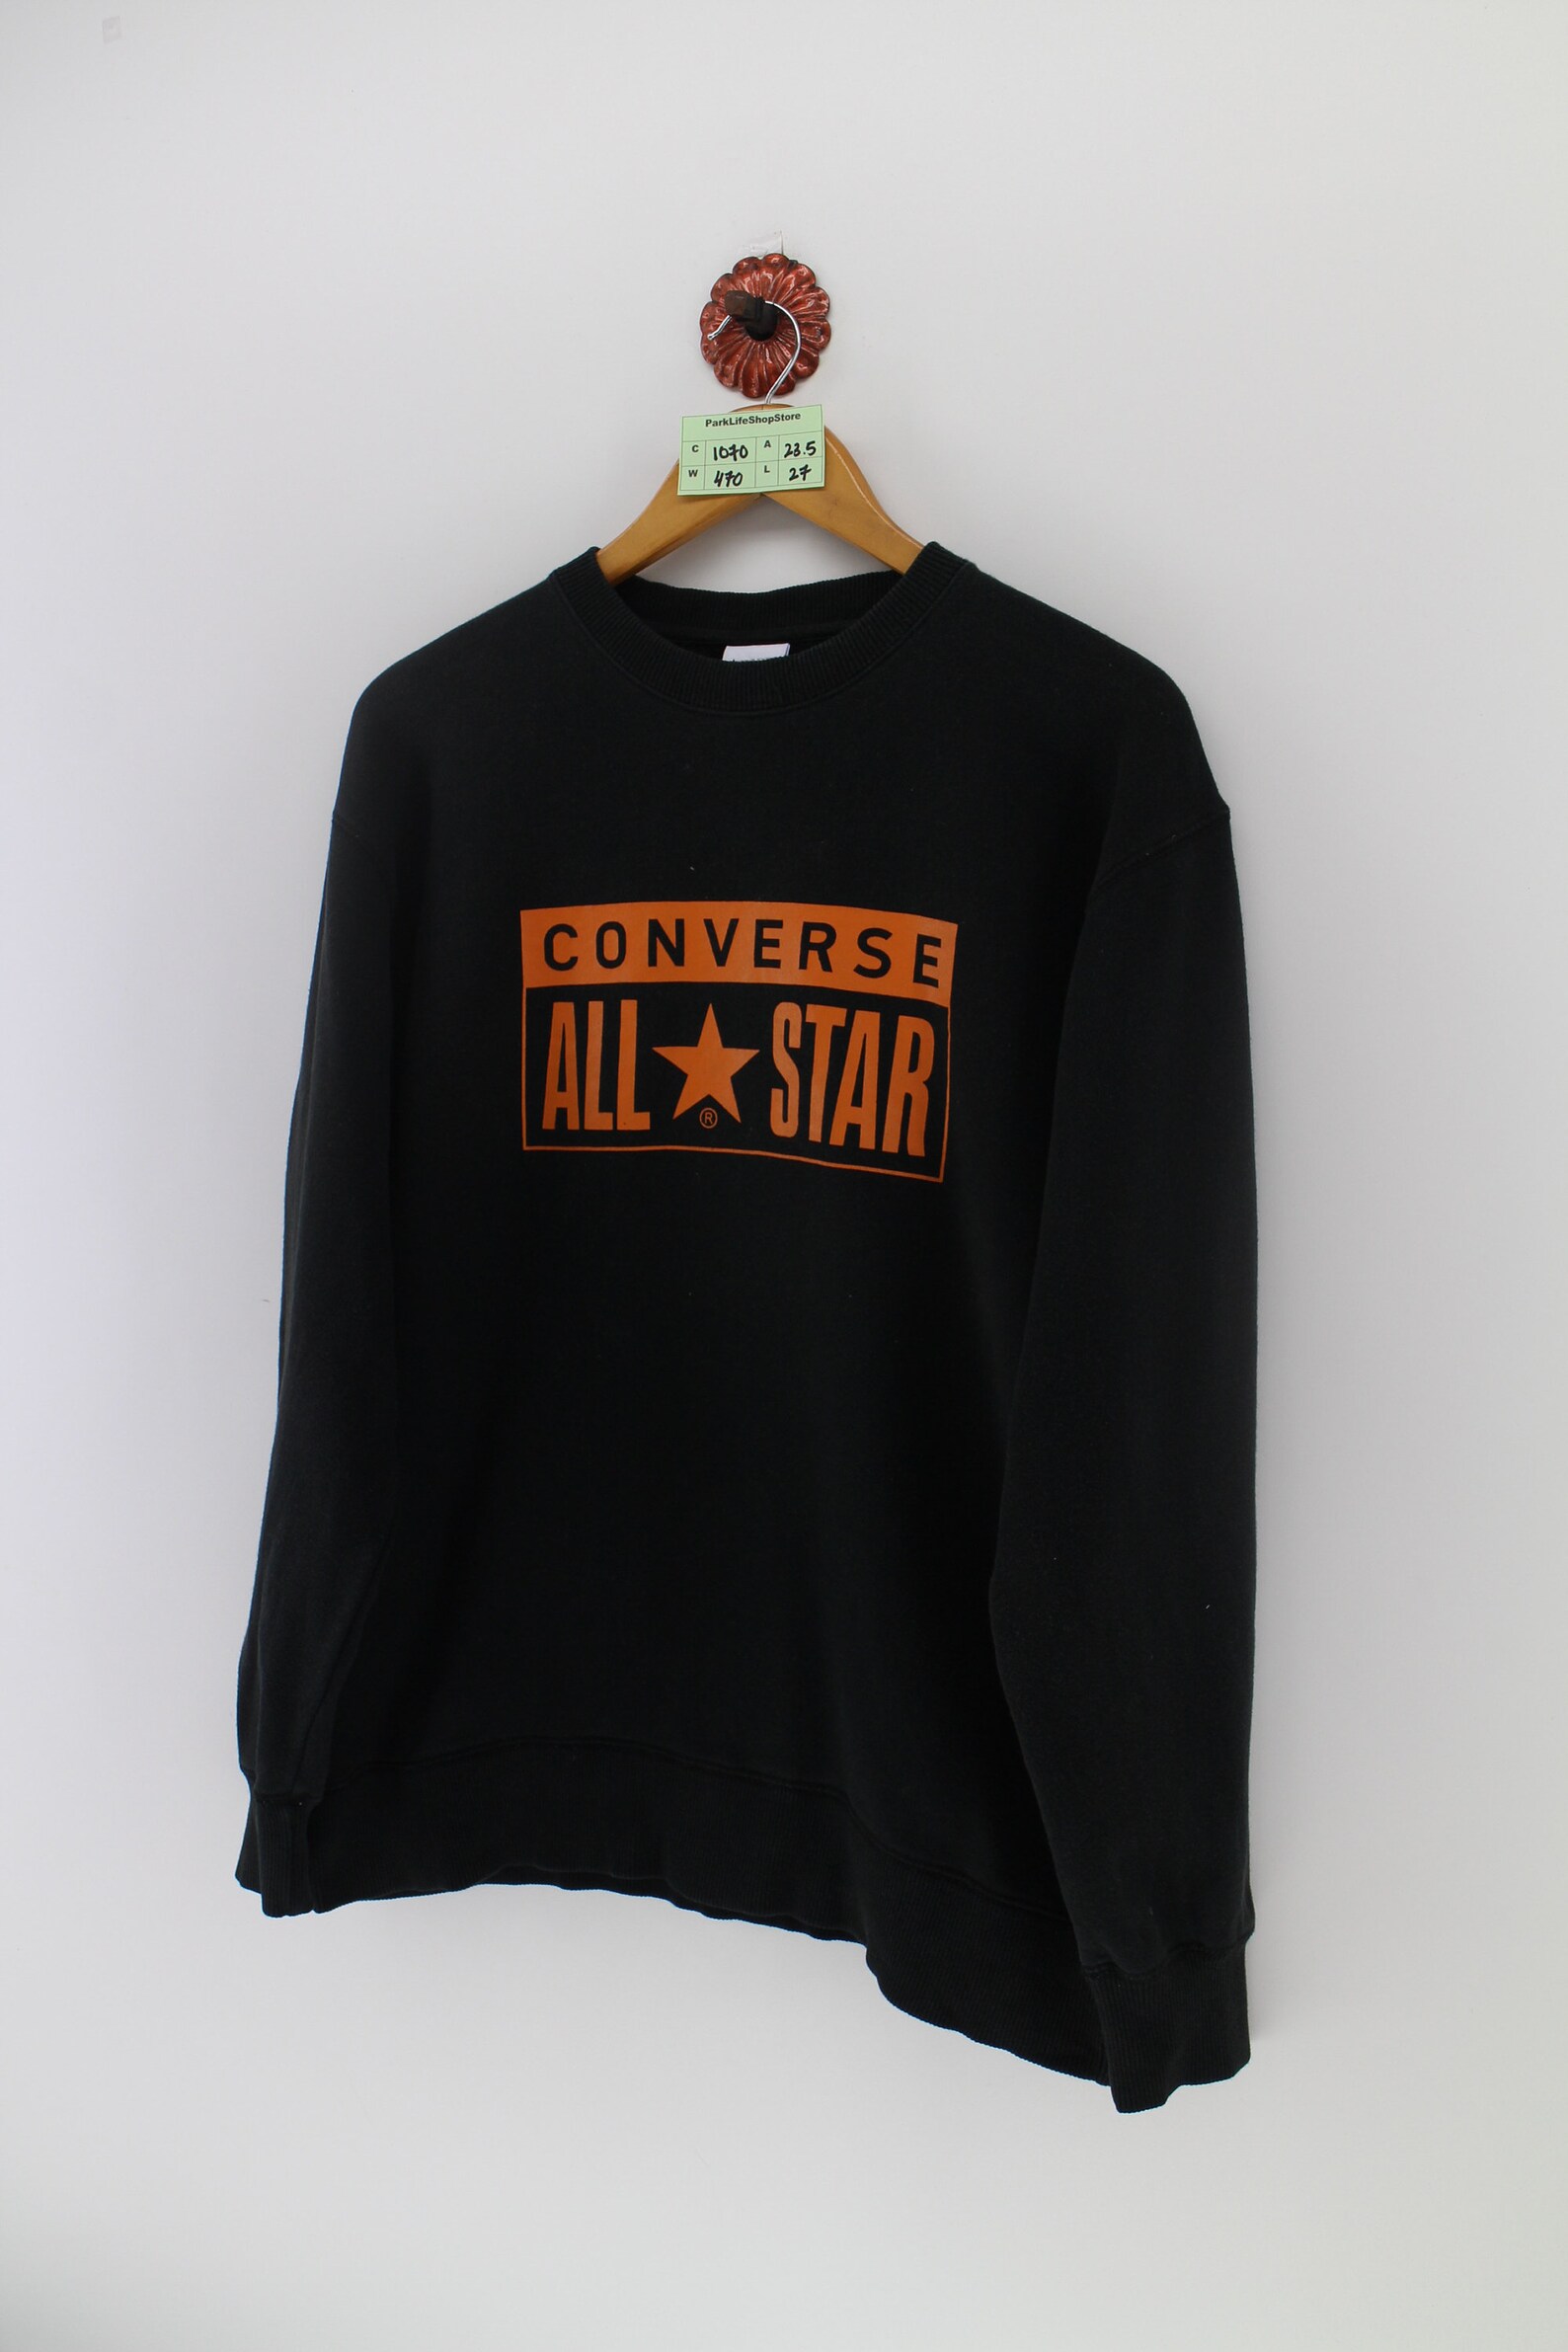 CONVERSE ALL STAR Pullover Sweatshirt Unisex Medium Vintage | Etsy